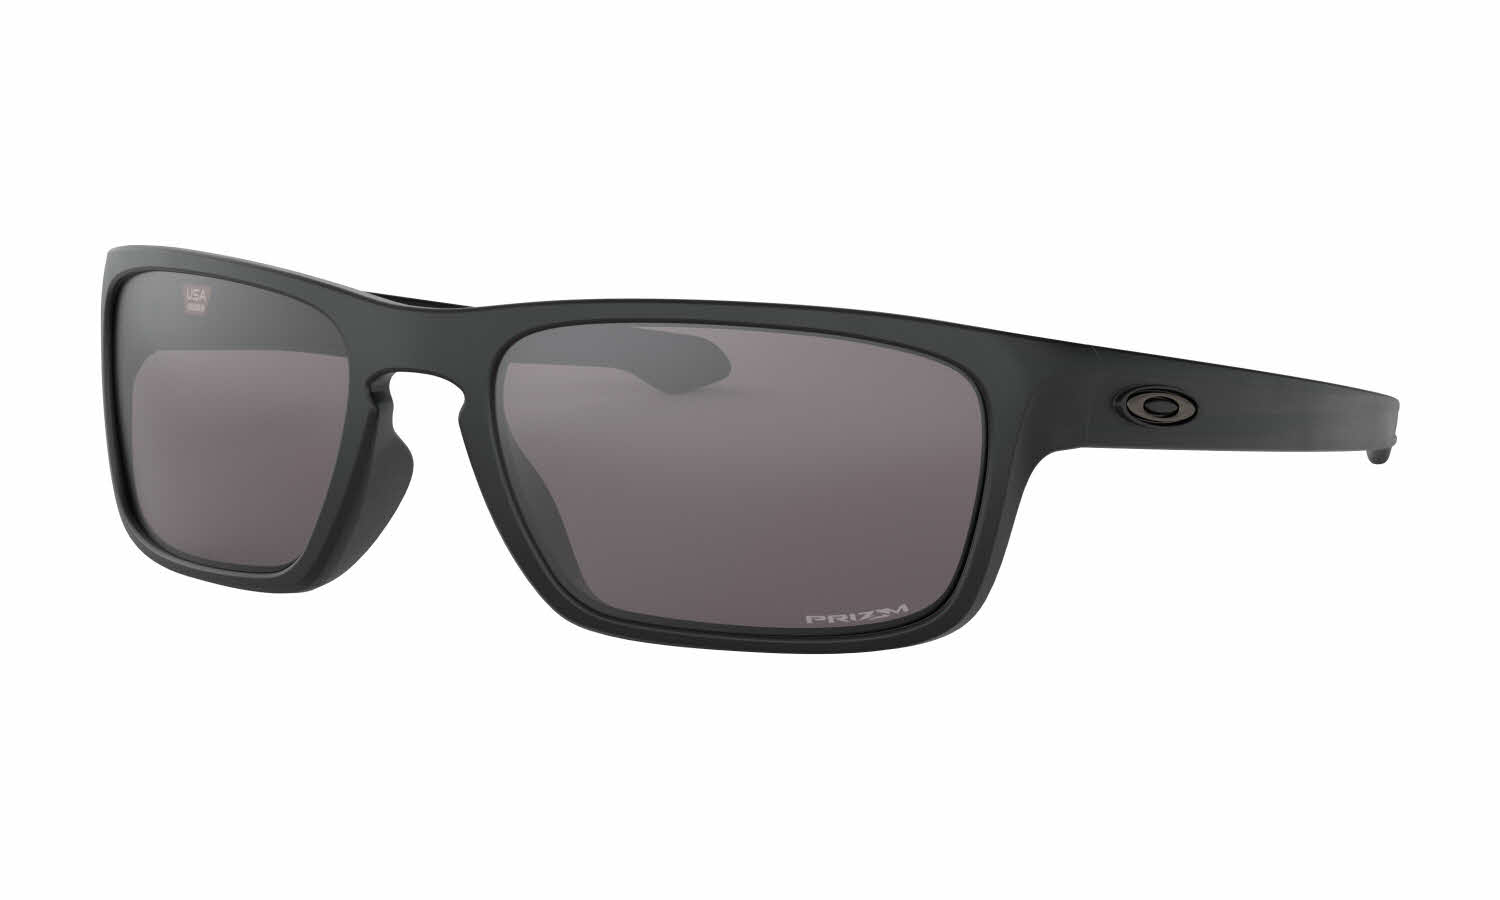 Oakley Sliver Stealth Sunglasses Review | SportRx